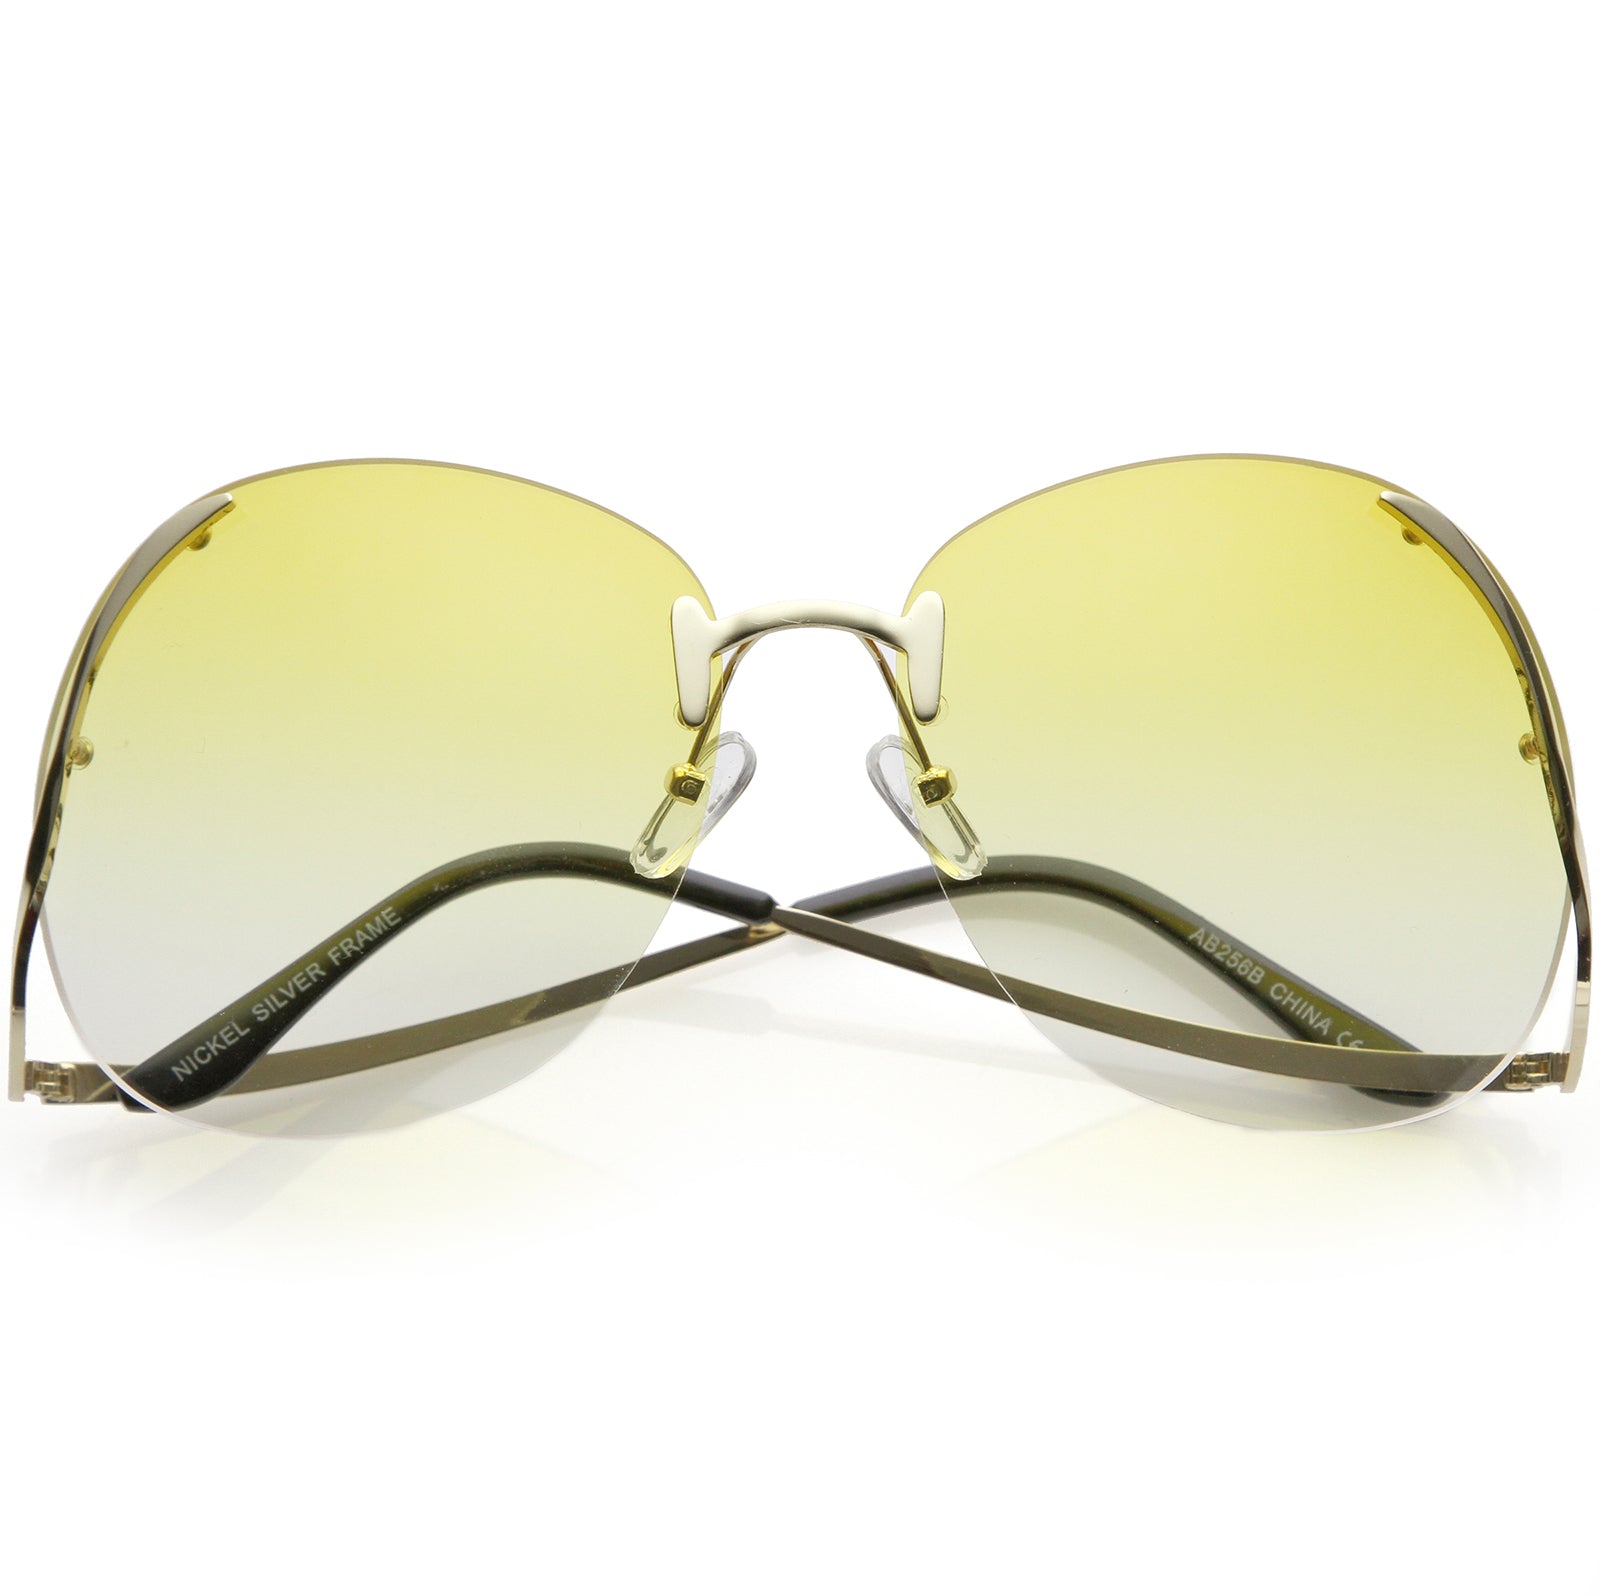 Oversize Gradient Sunglasses Women Rimless Square Big Frame Shield Sunglasses, Green Yellow Red